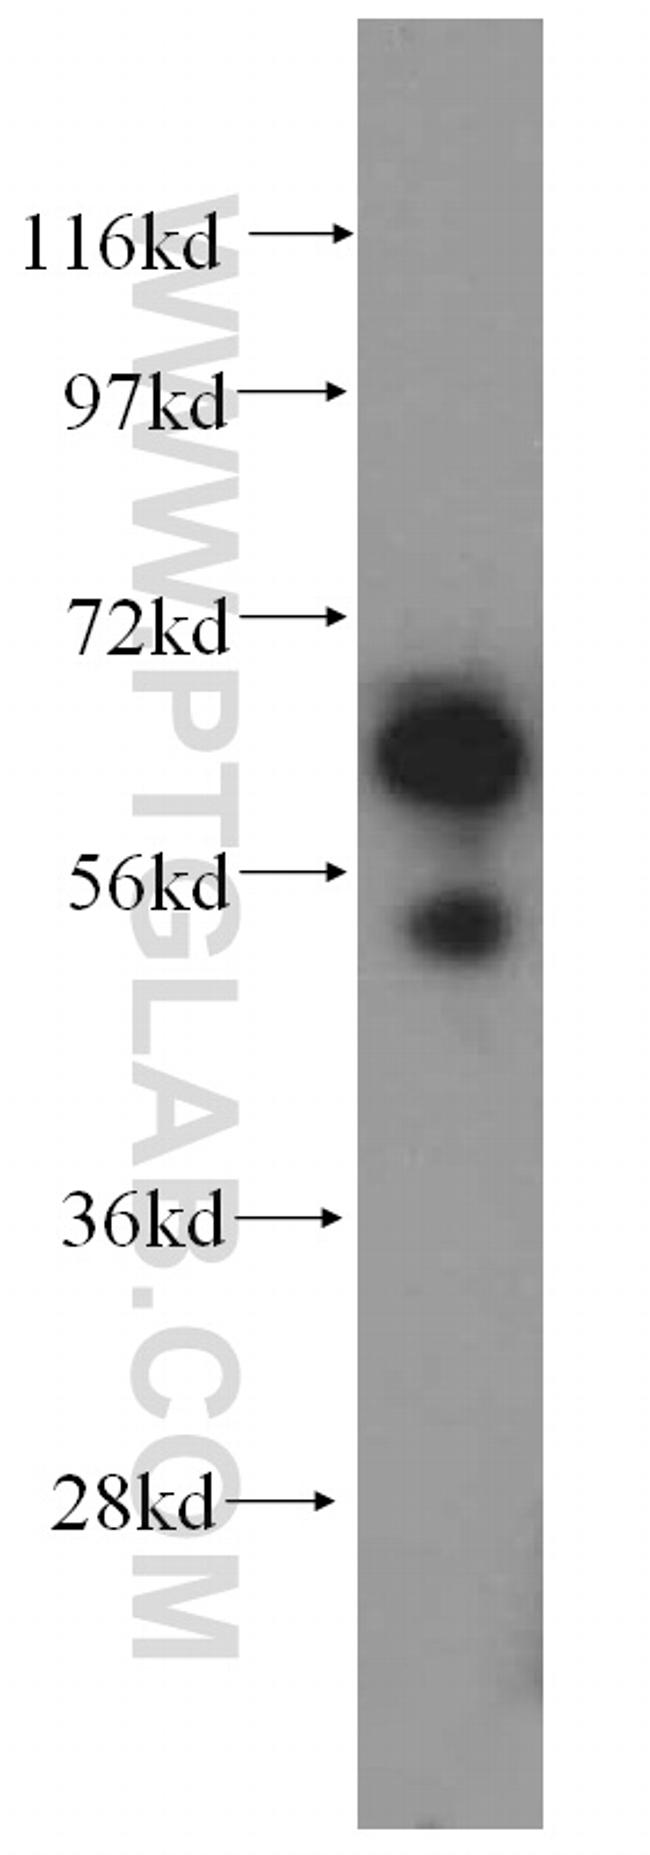 SUOX Antibody in Western Blot (WB)